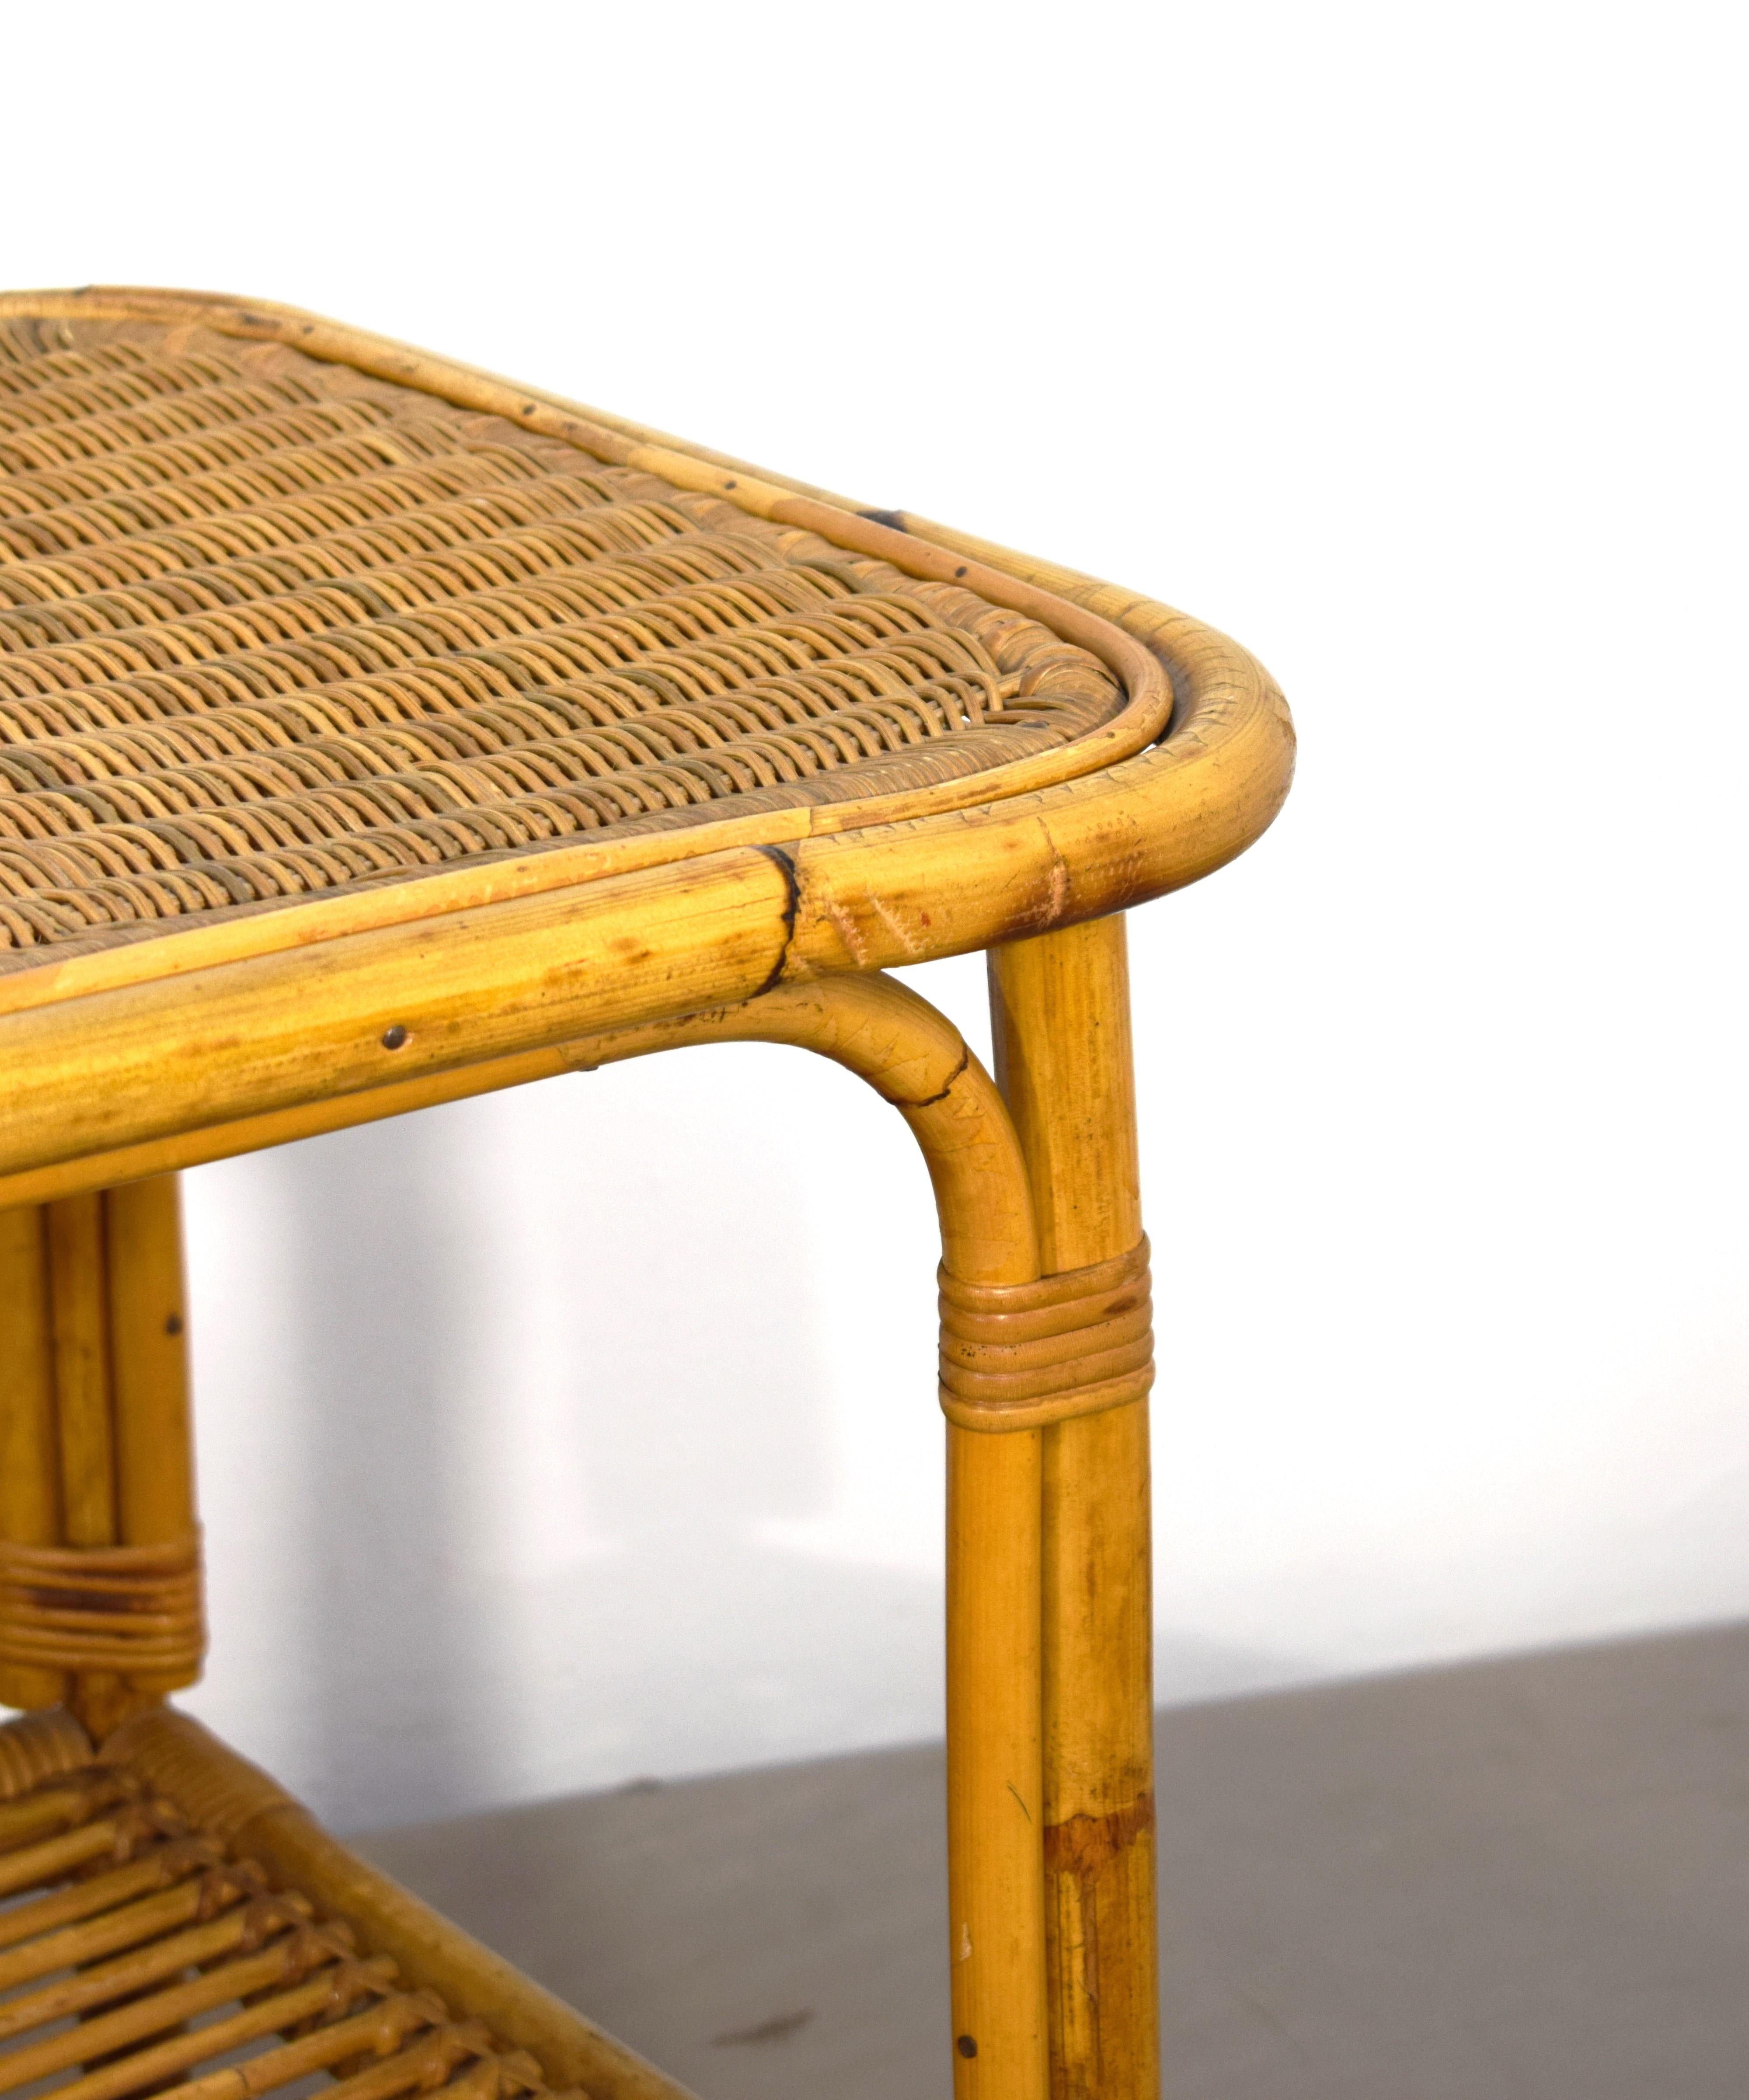 Italian bamboo coffee table, 1960s.
Dimensions: H= 55 cm; W= 86 cm; D= 50 cm.